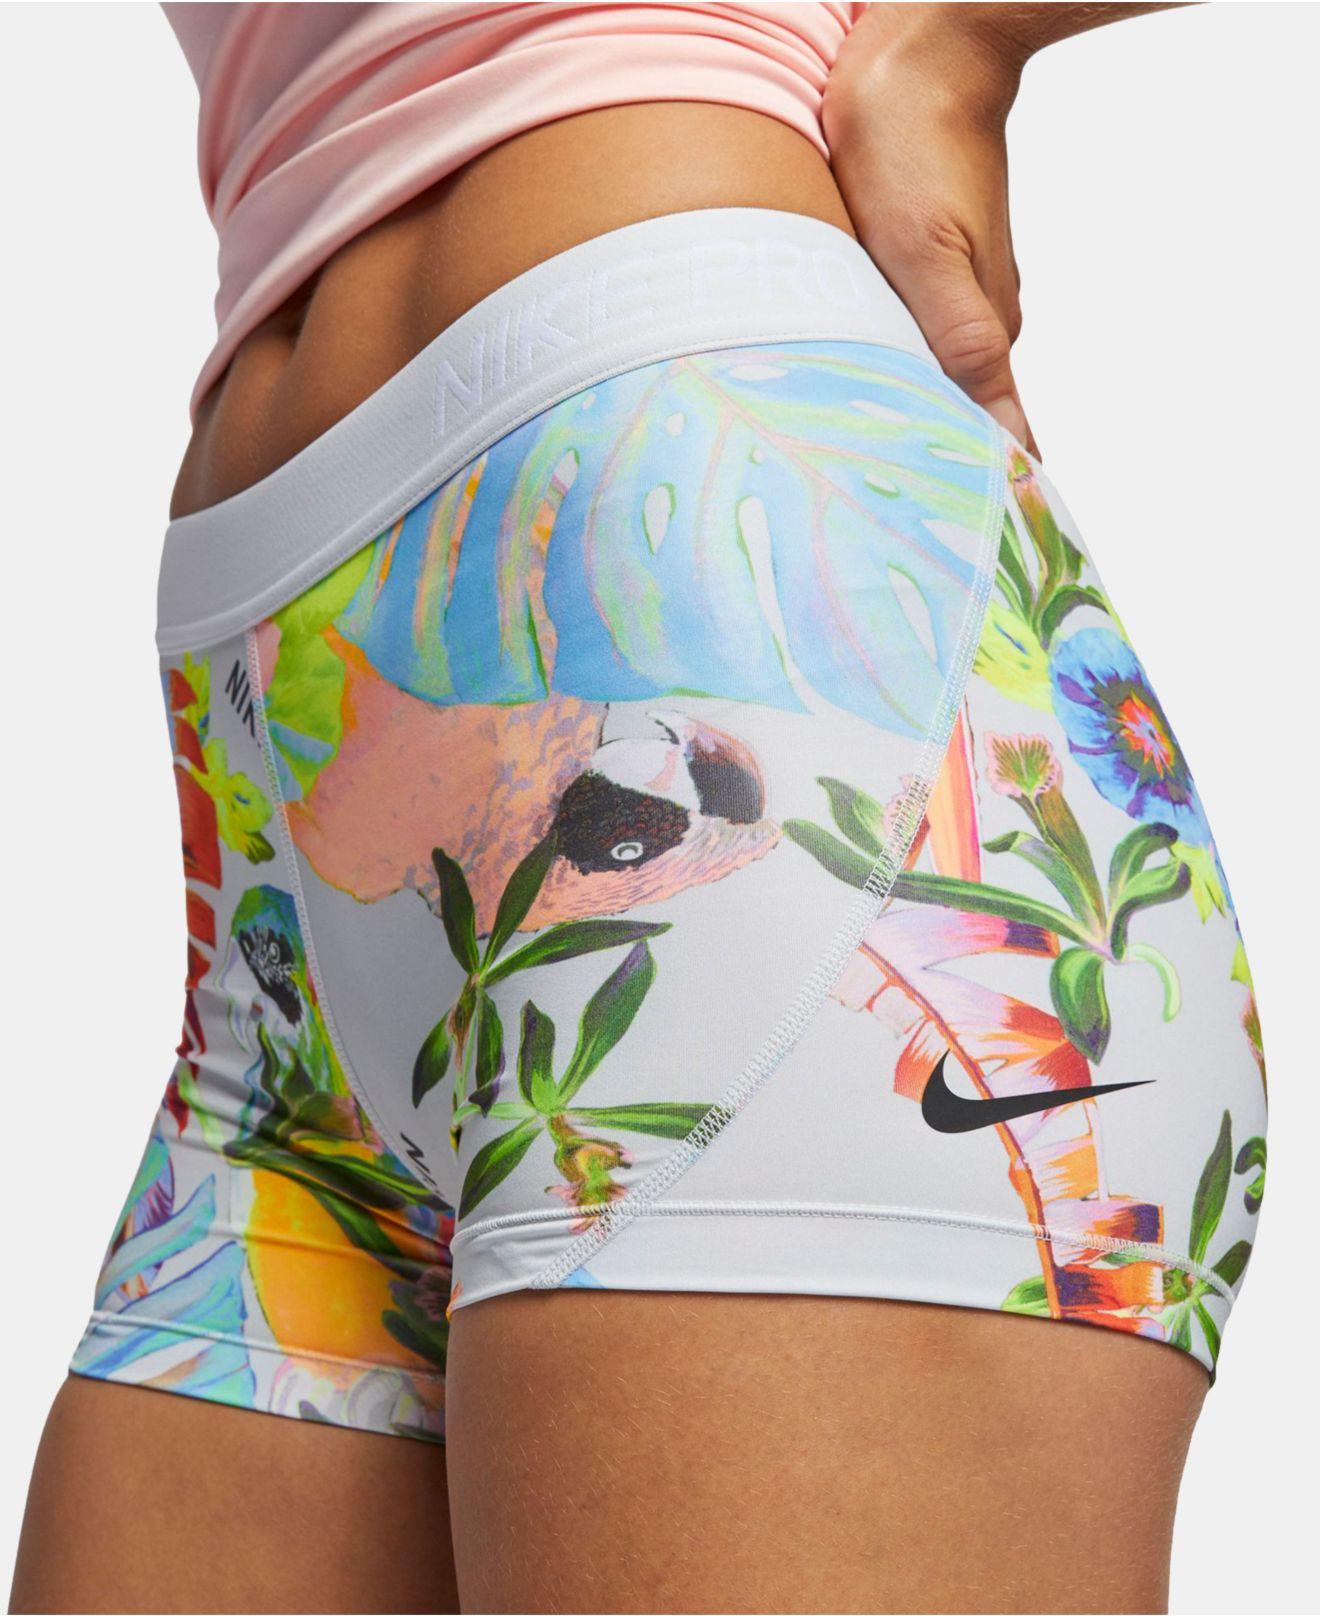 nike pro ultra femme printed shorts